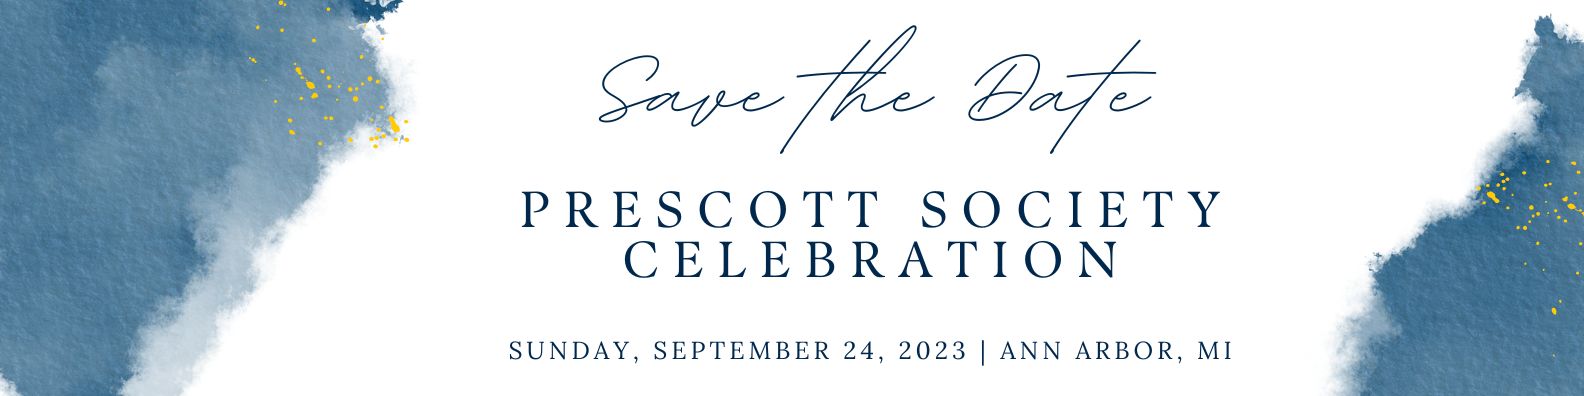 Save the date image for 2023 Prescott Society Celebration